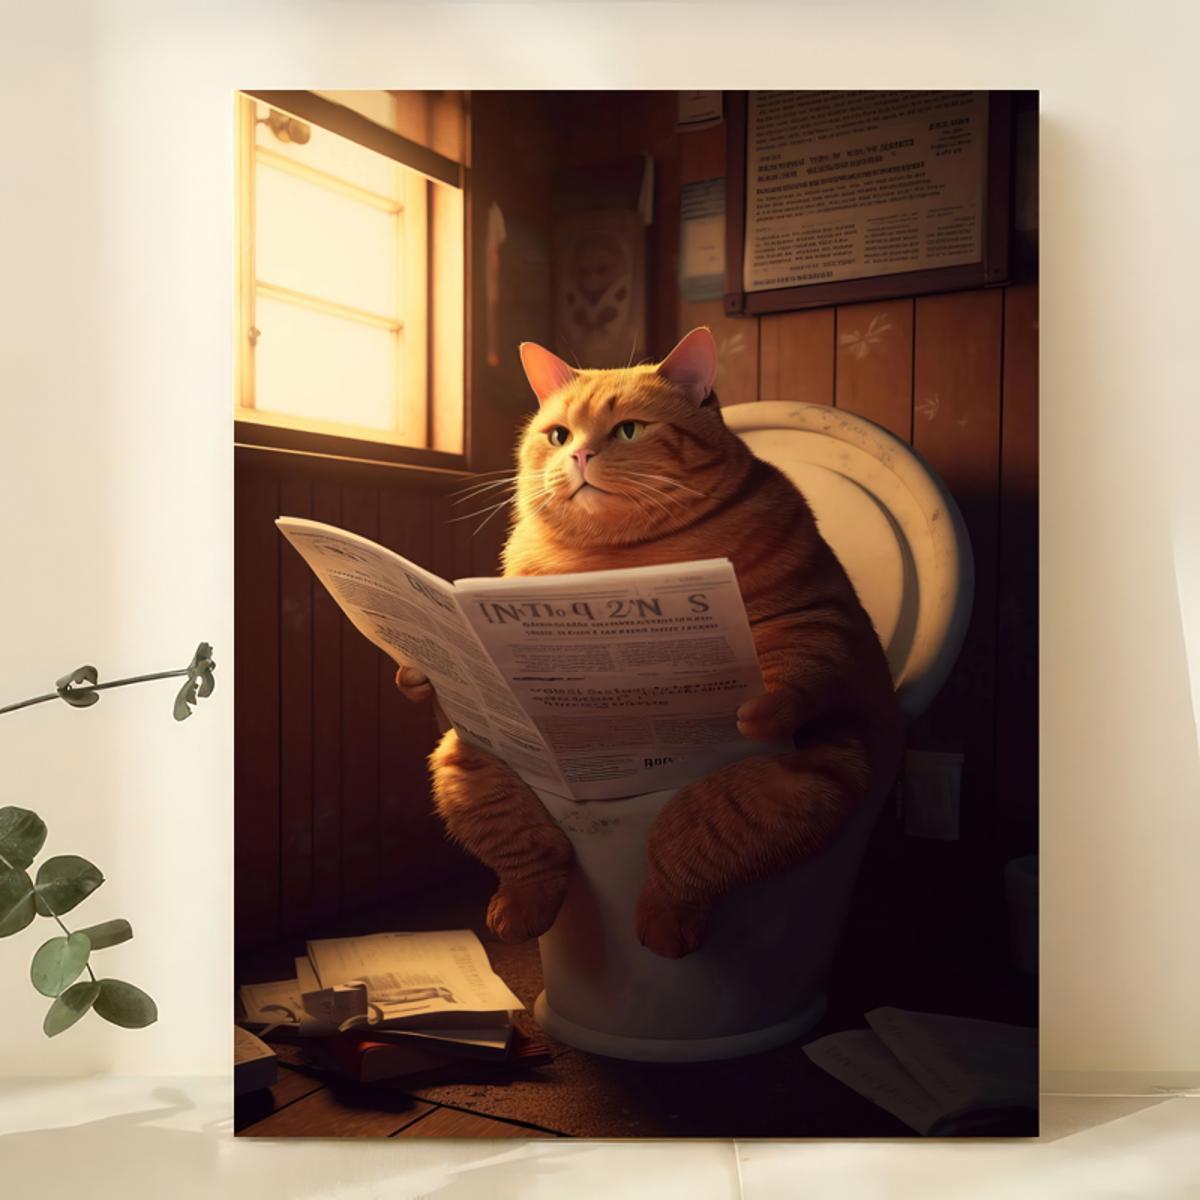 newspaper cat meme